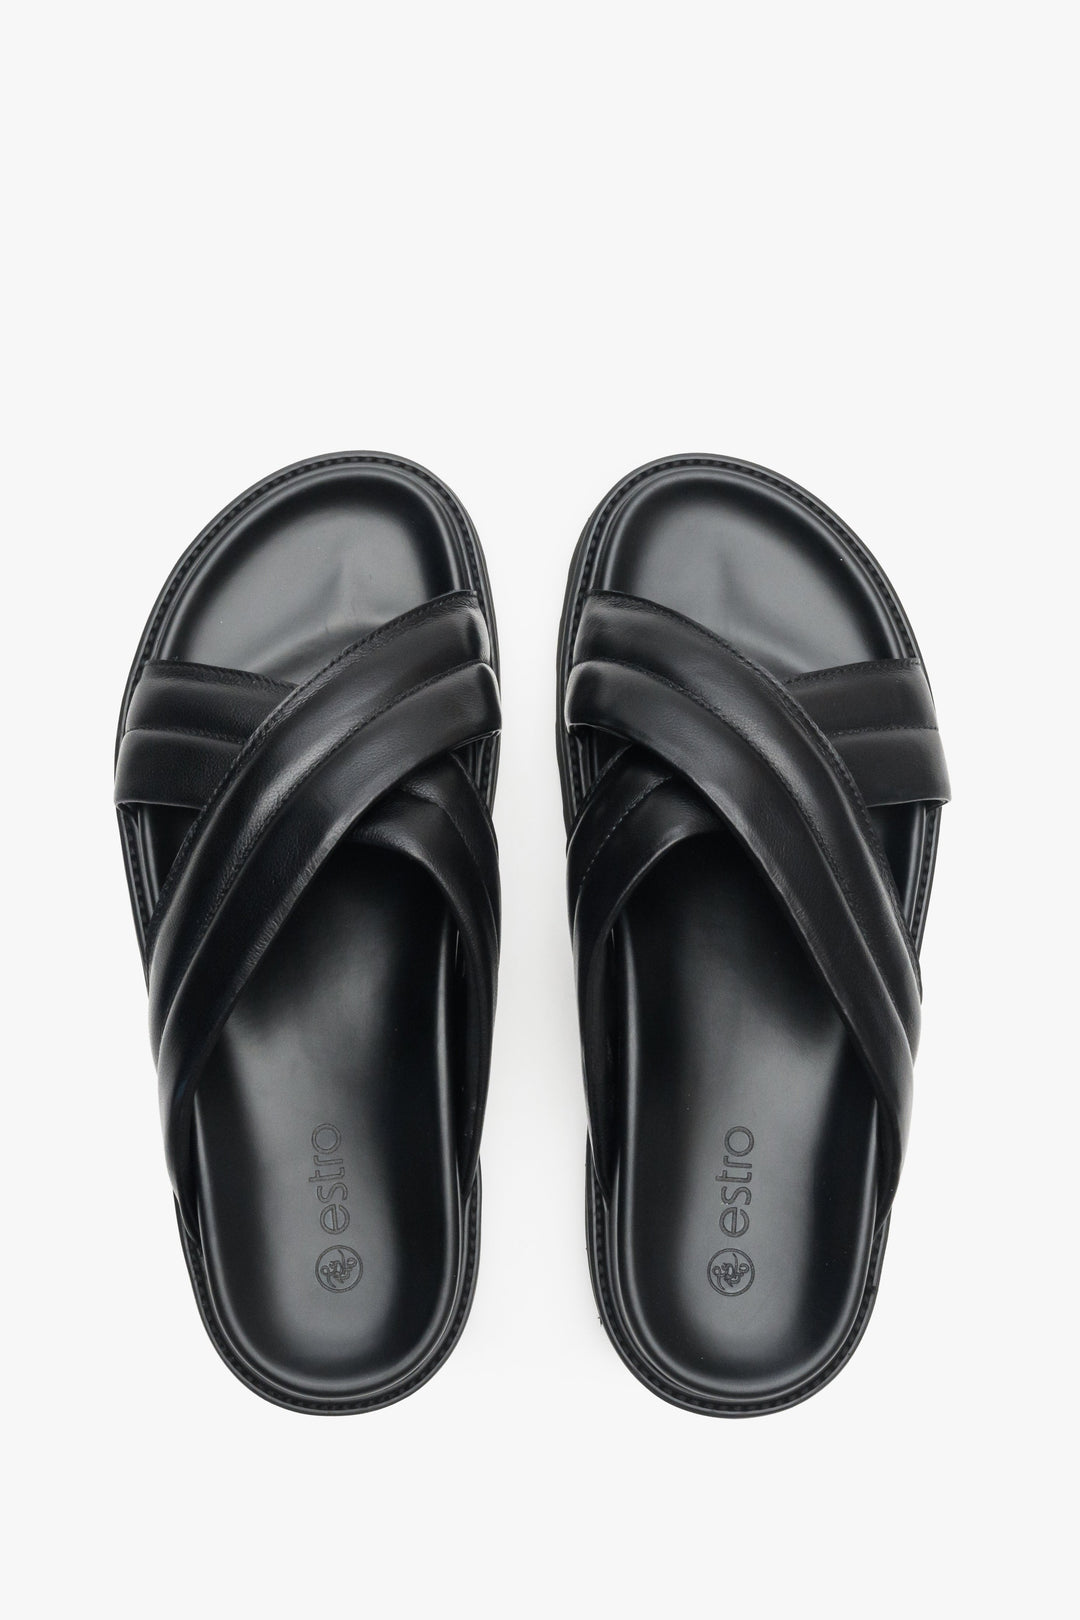 Black men's Estro sandals with wide, soft, black cross straps - top view model presentation.